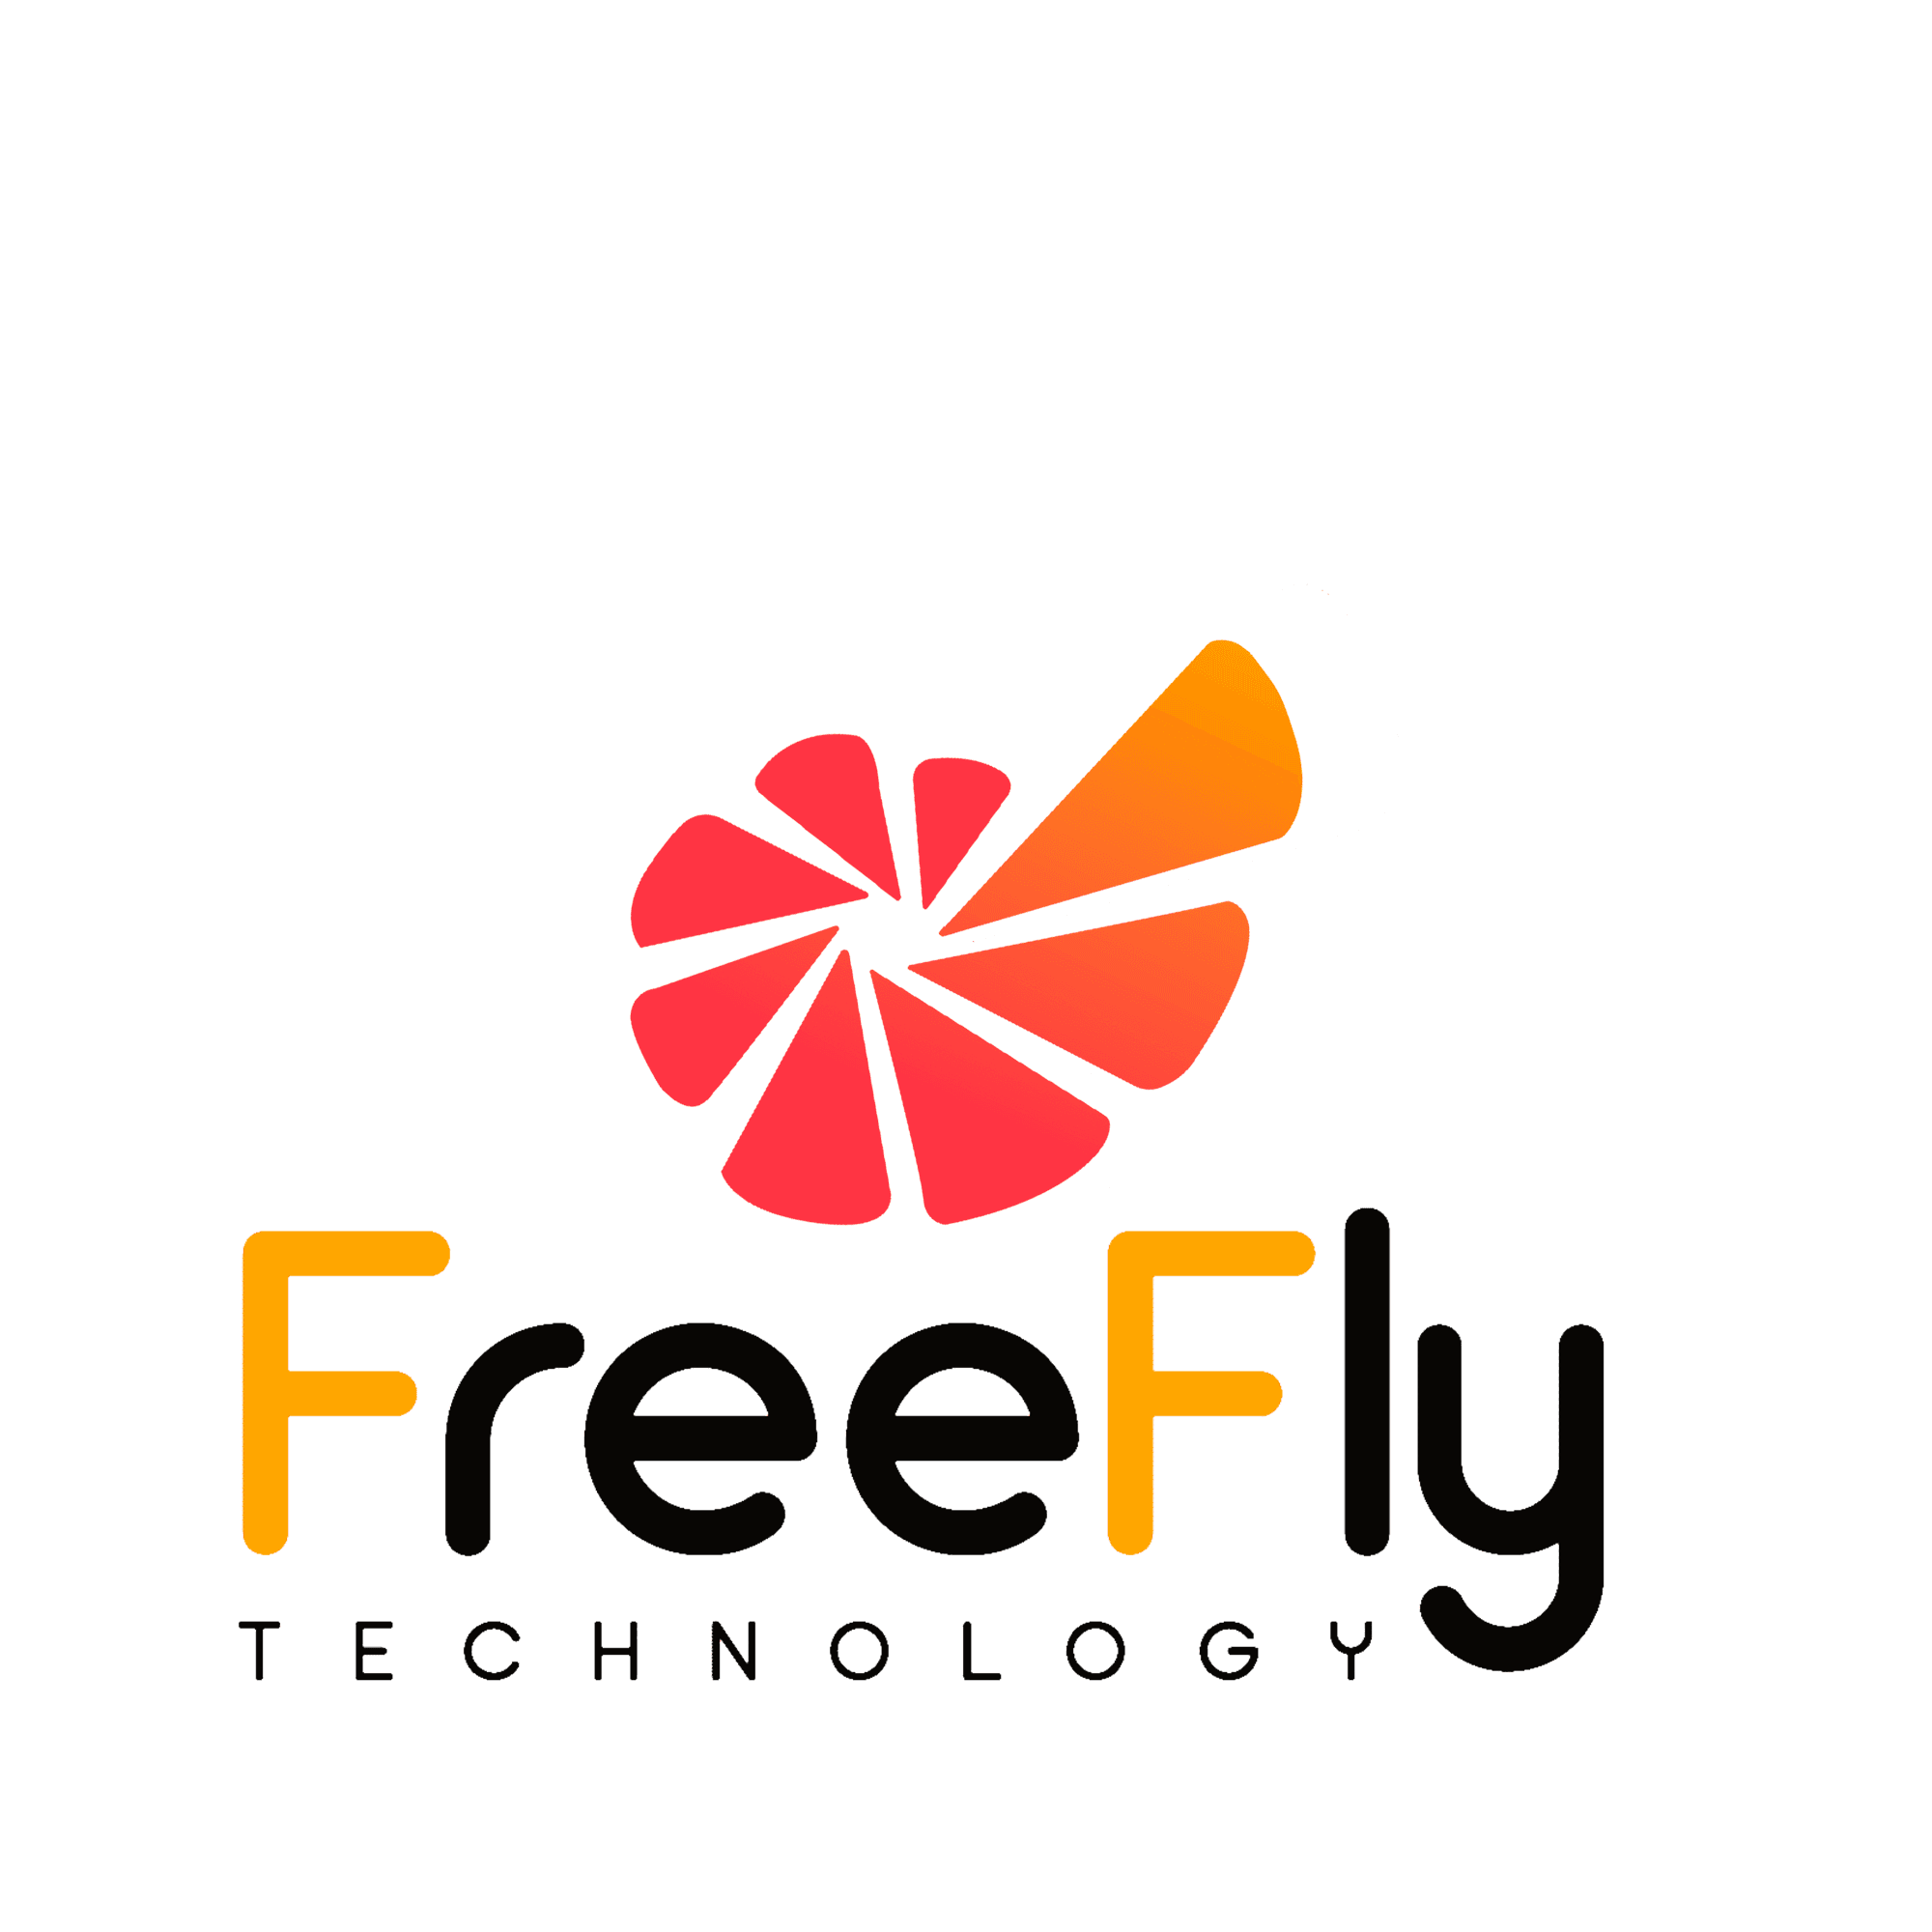 FreeFly Technology